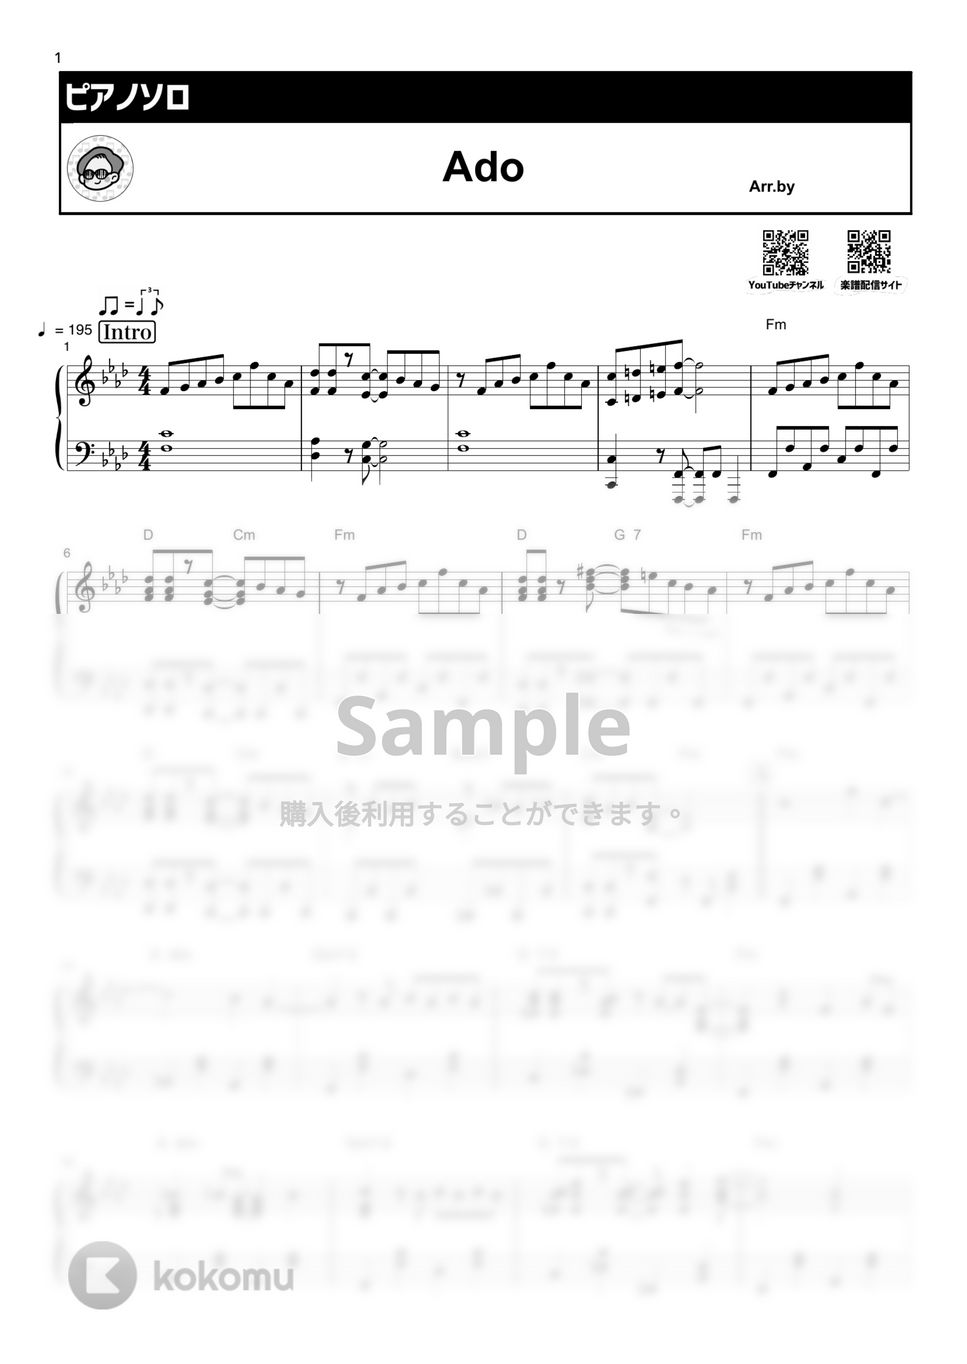 Ado - レディメイド by シータピアノ